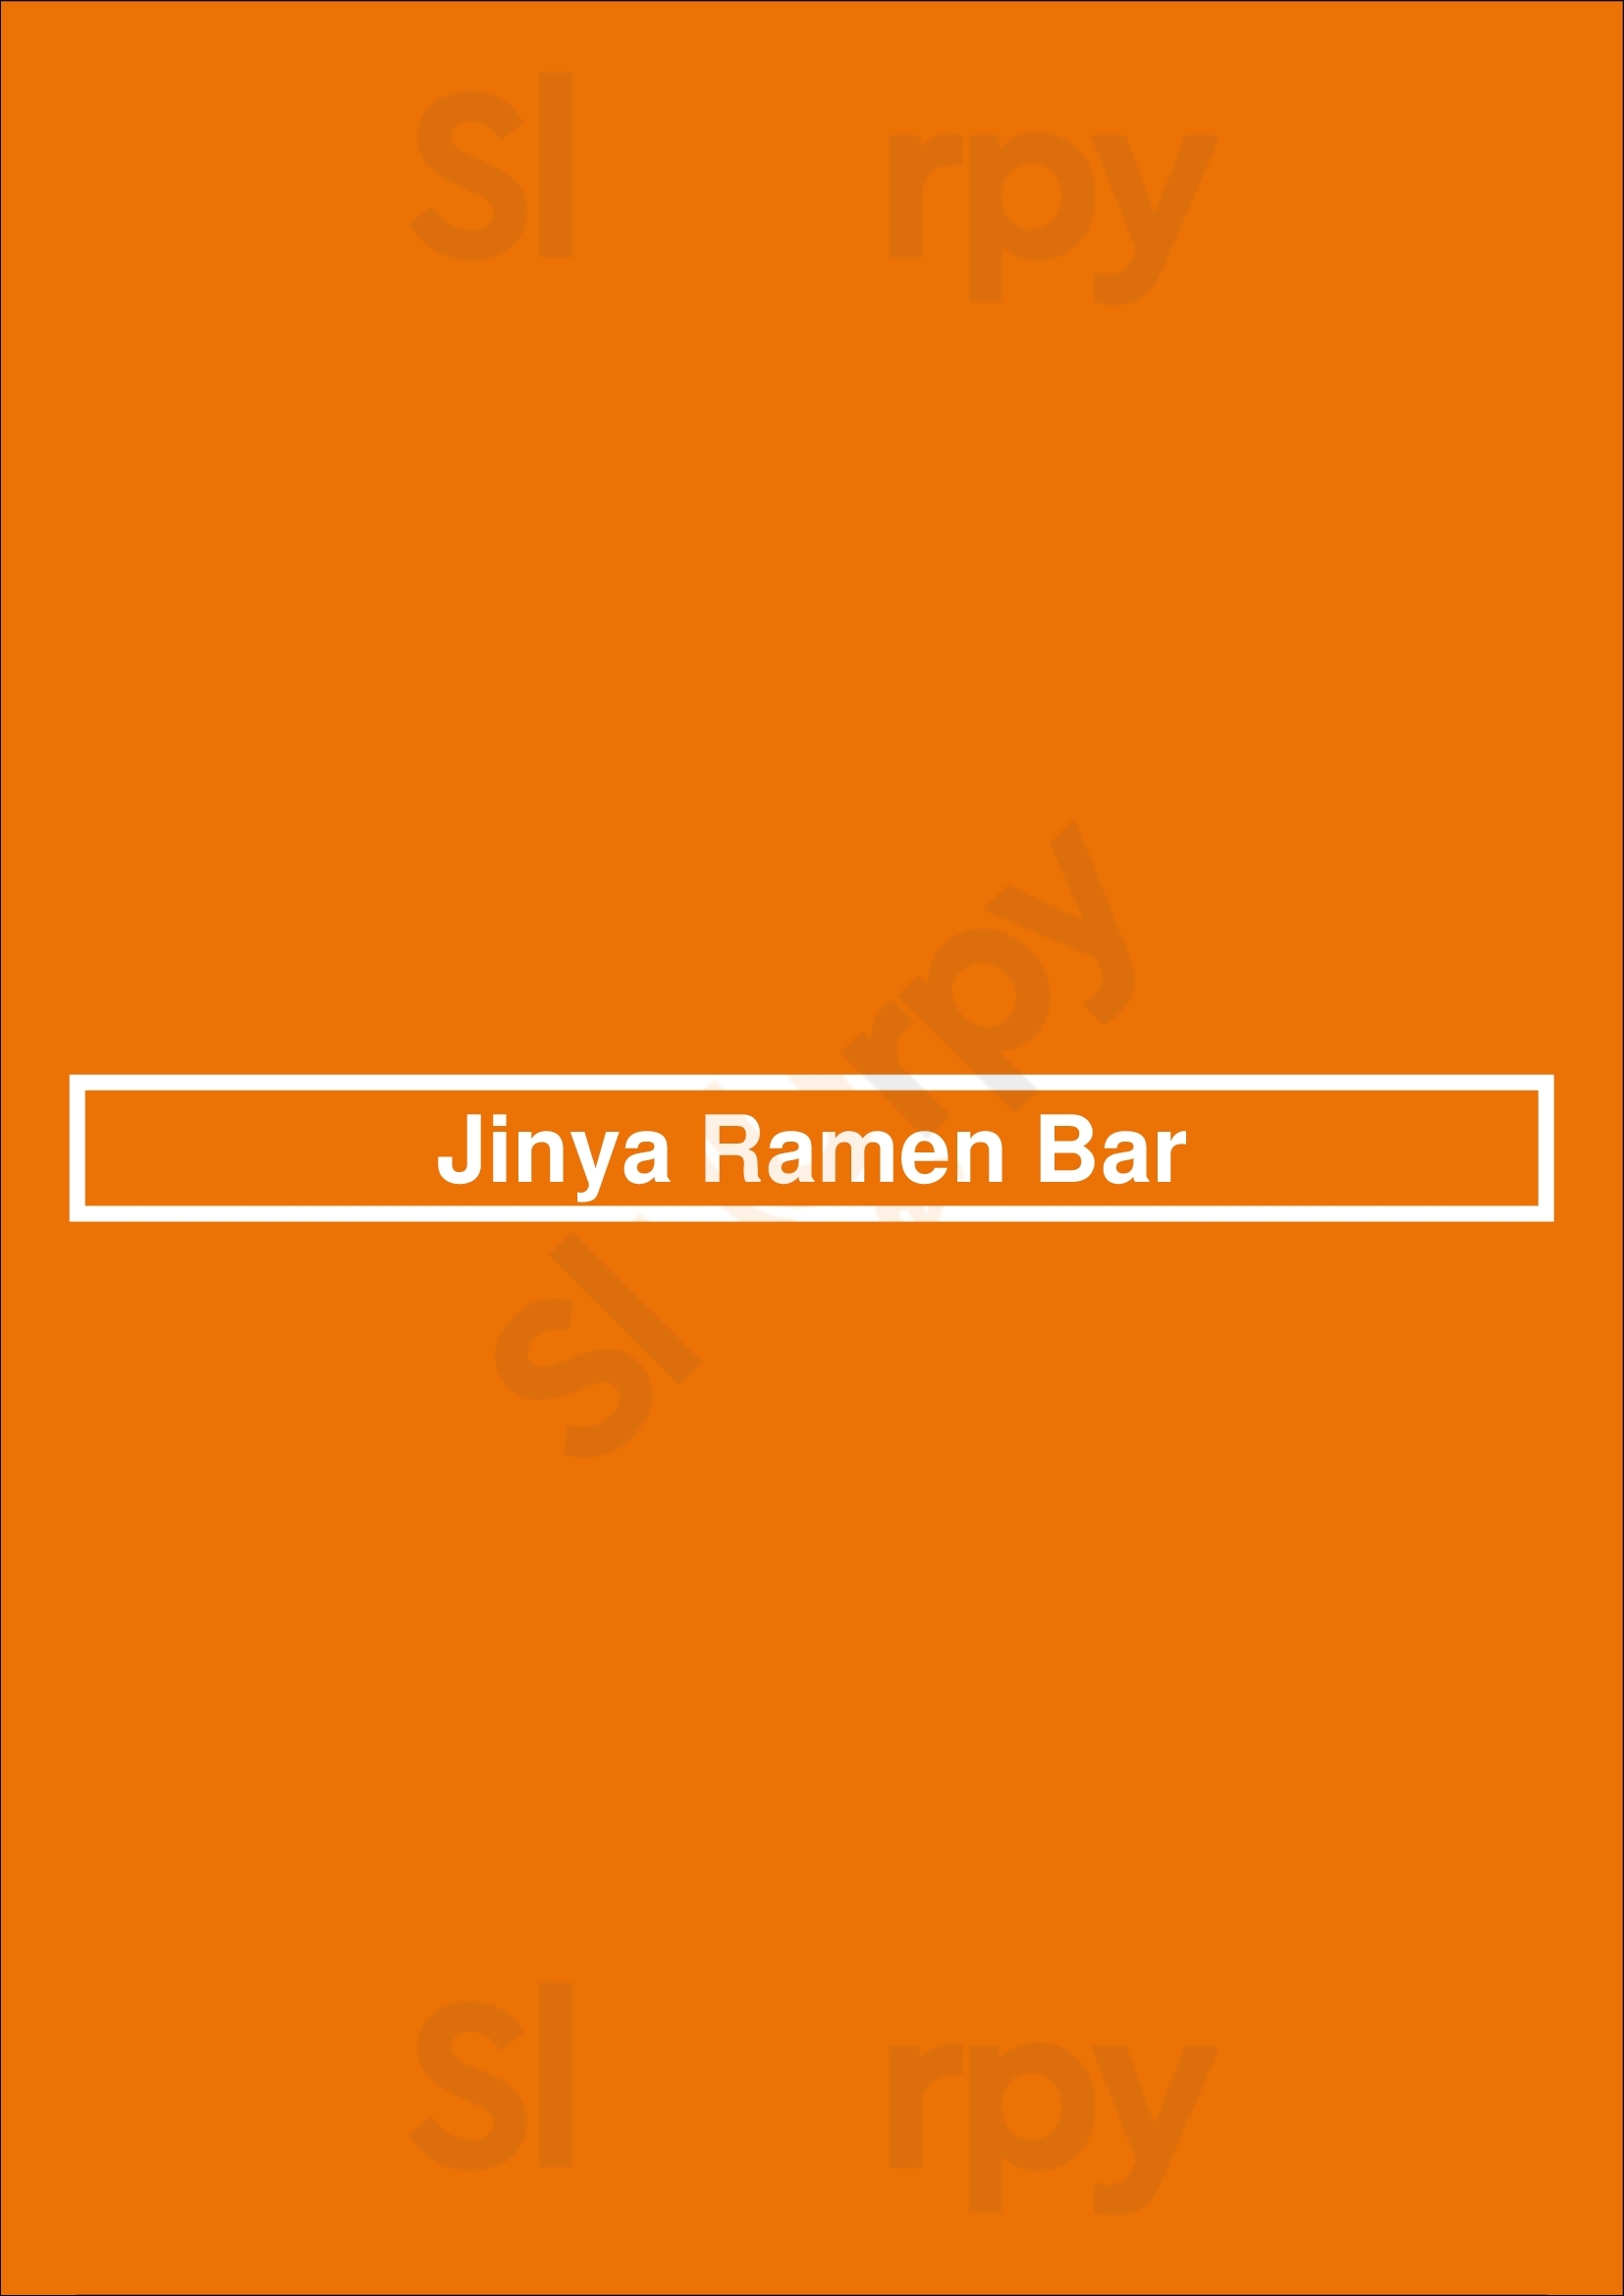 Jinya Ramen Bar - Thornton Park Orlando Menu - 1